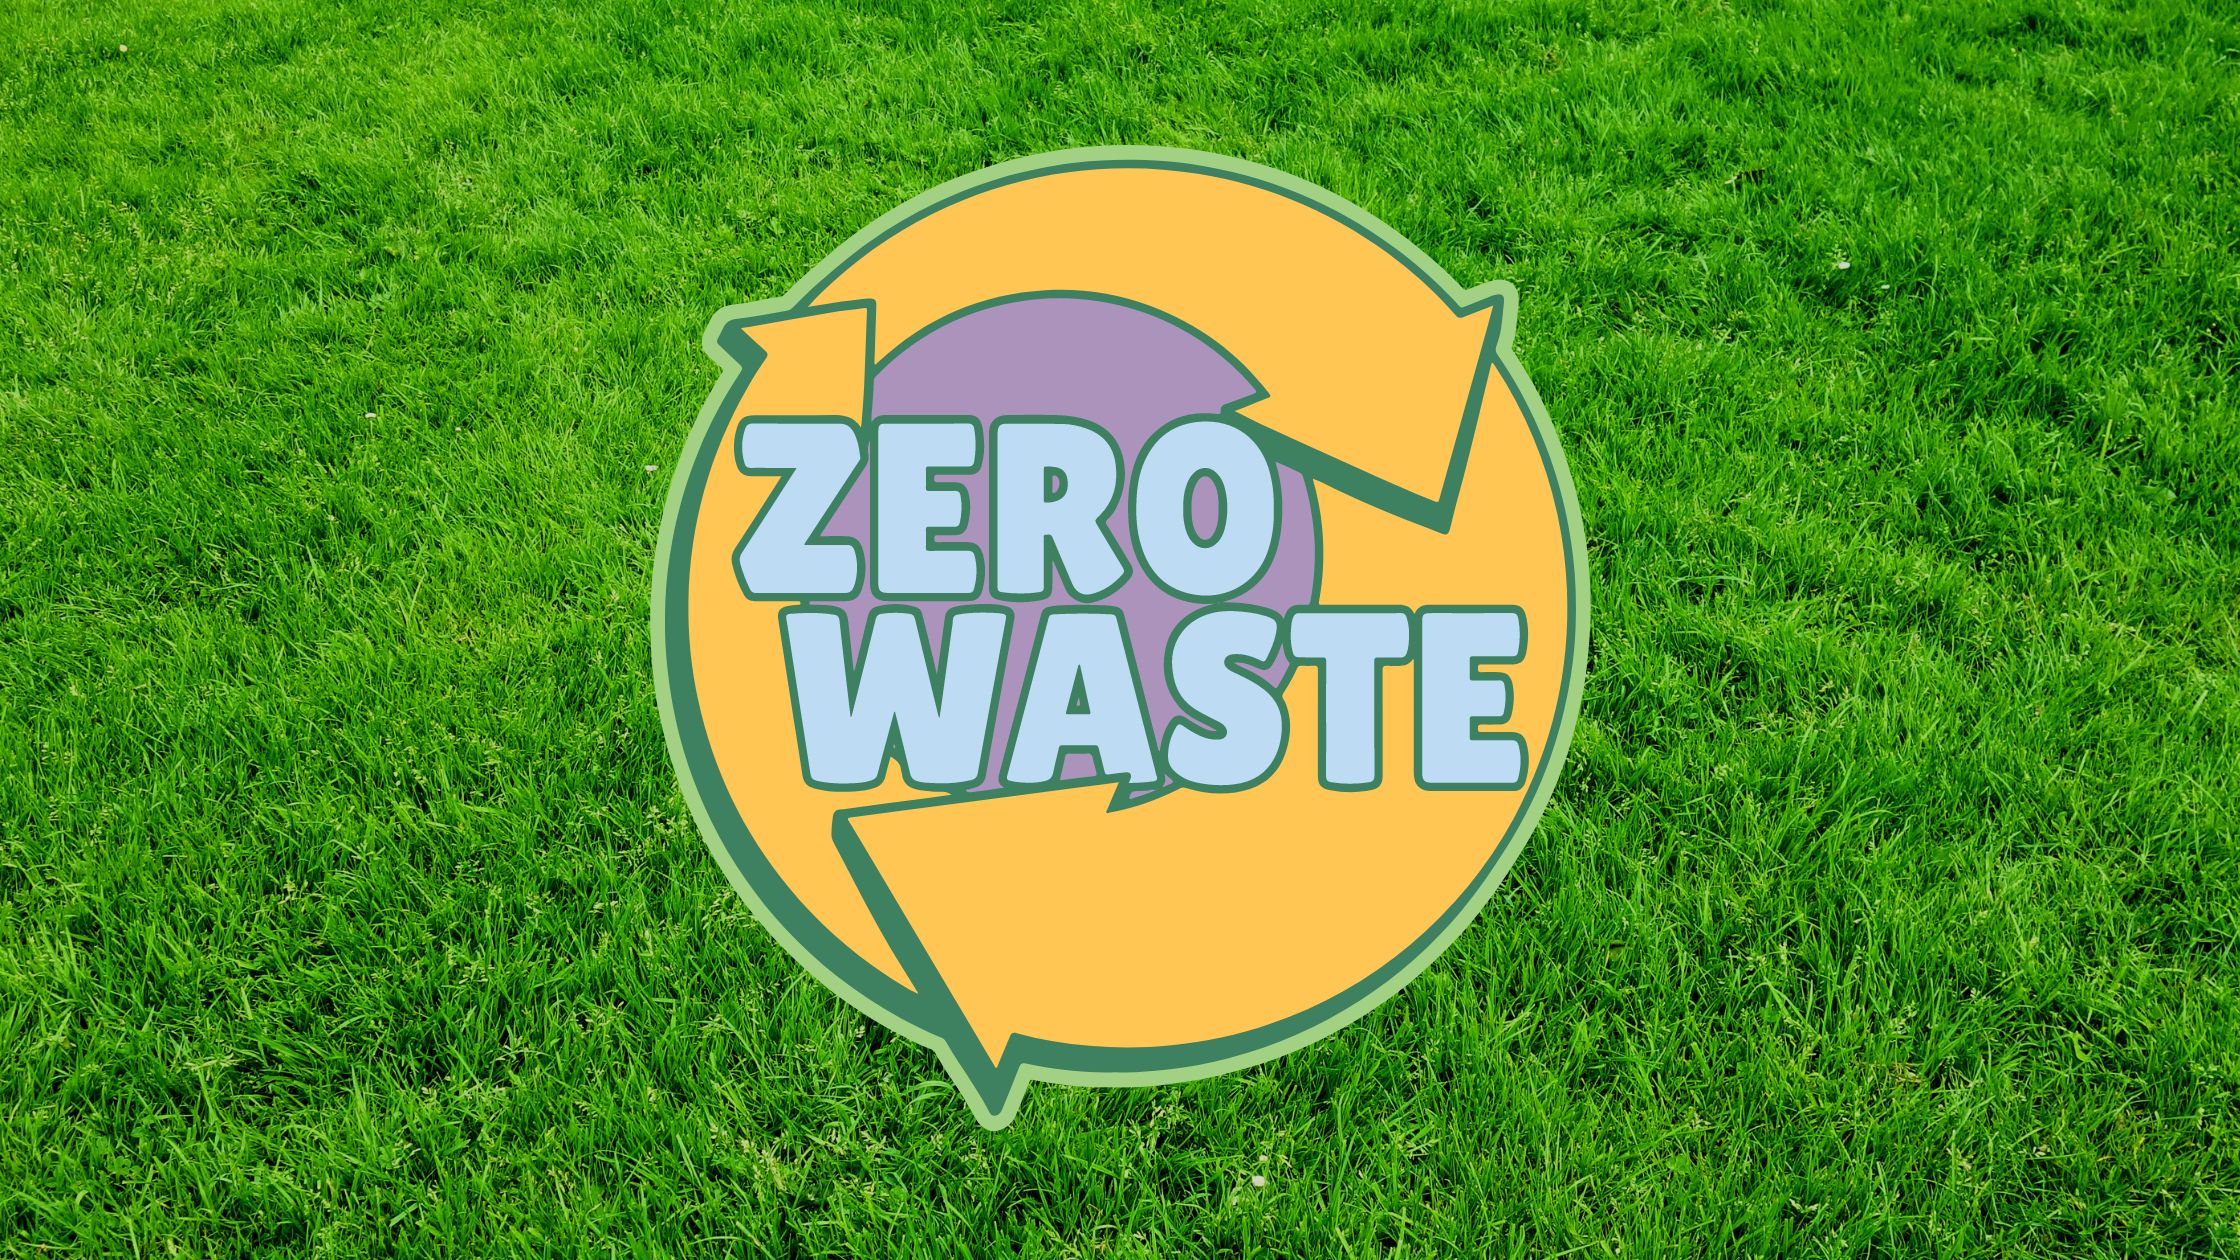 zero waste symbol in front of grass